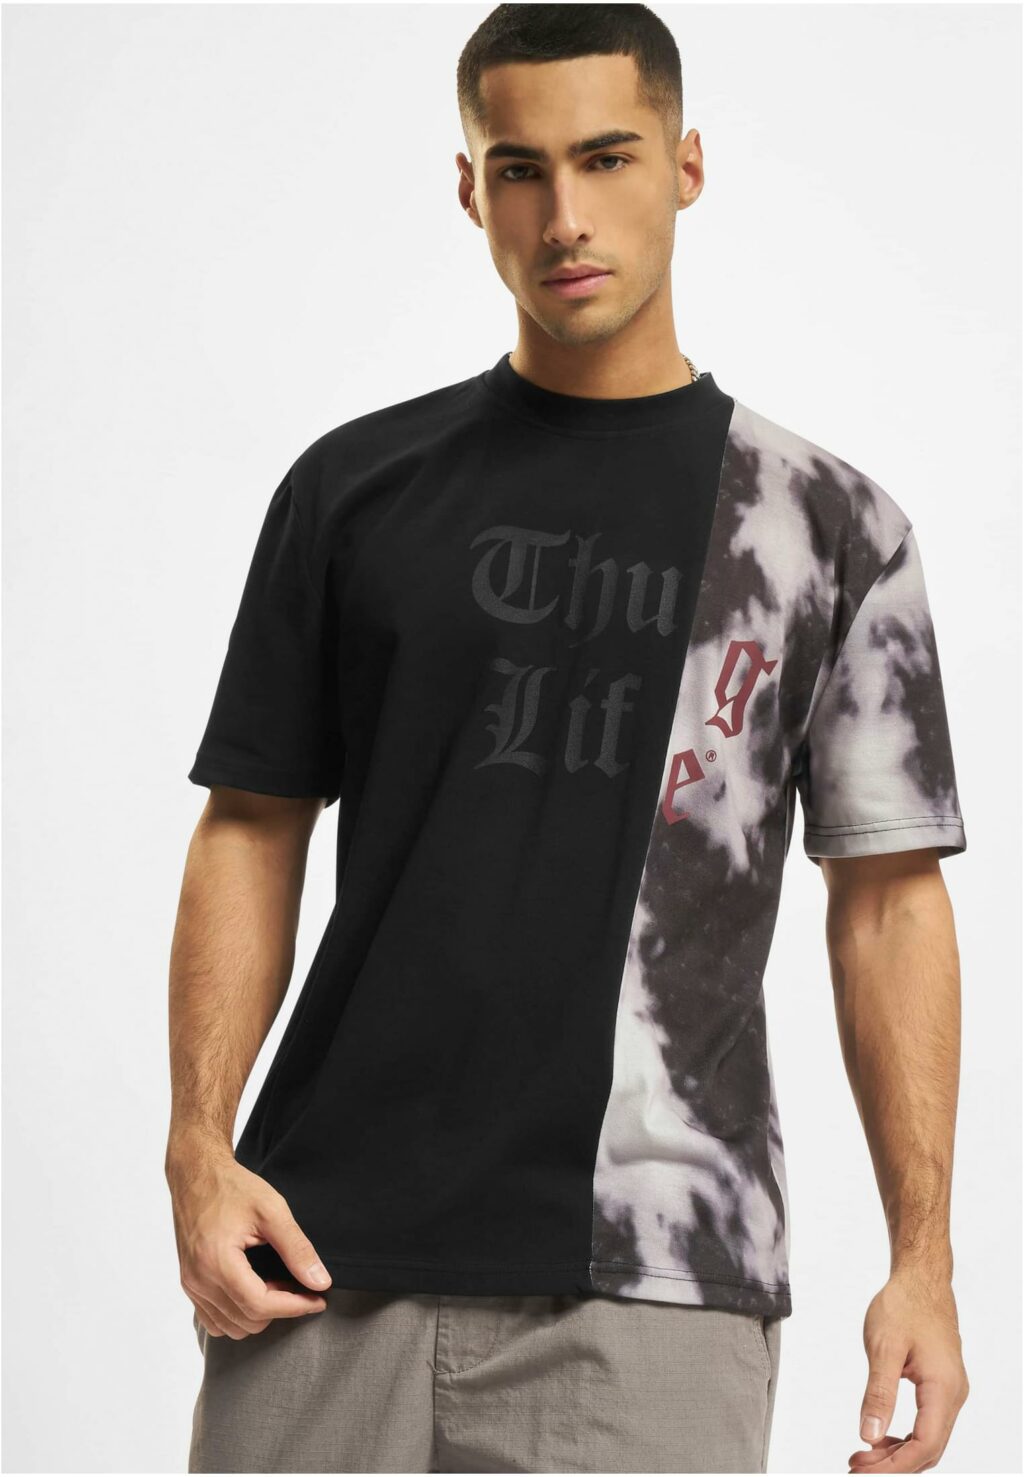 Thug Life Underground T-Shirts black TLTS191